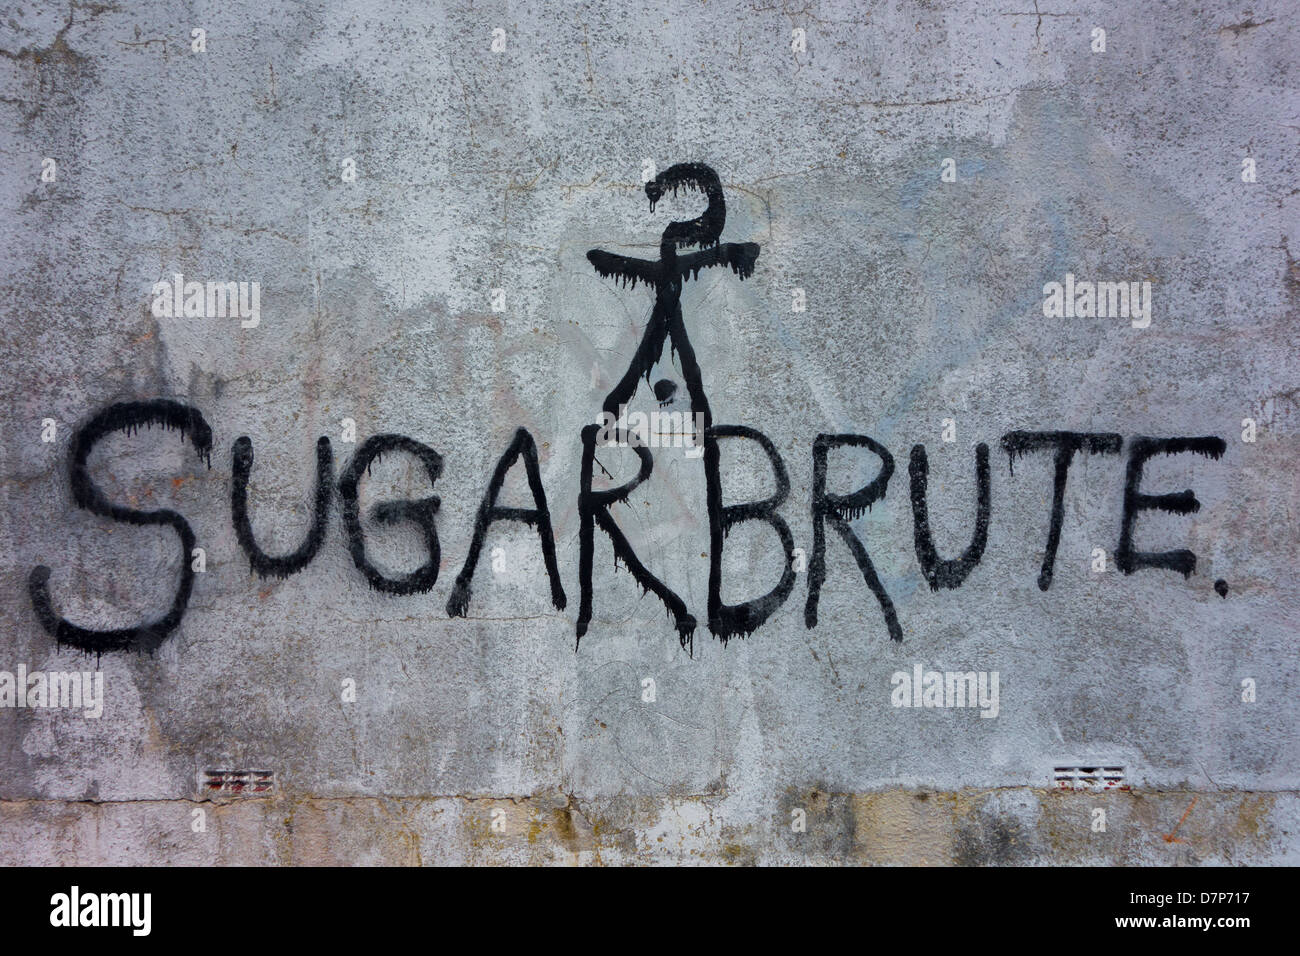 Graffiti on a wall reading 'SugarBrute' Stock Photo